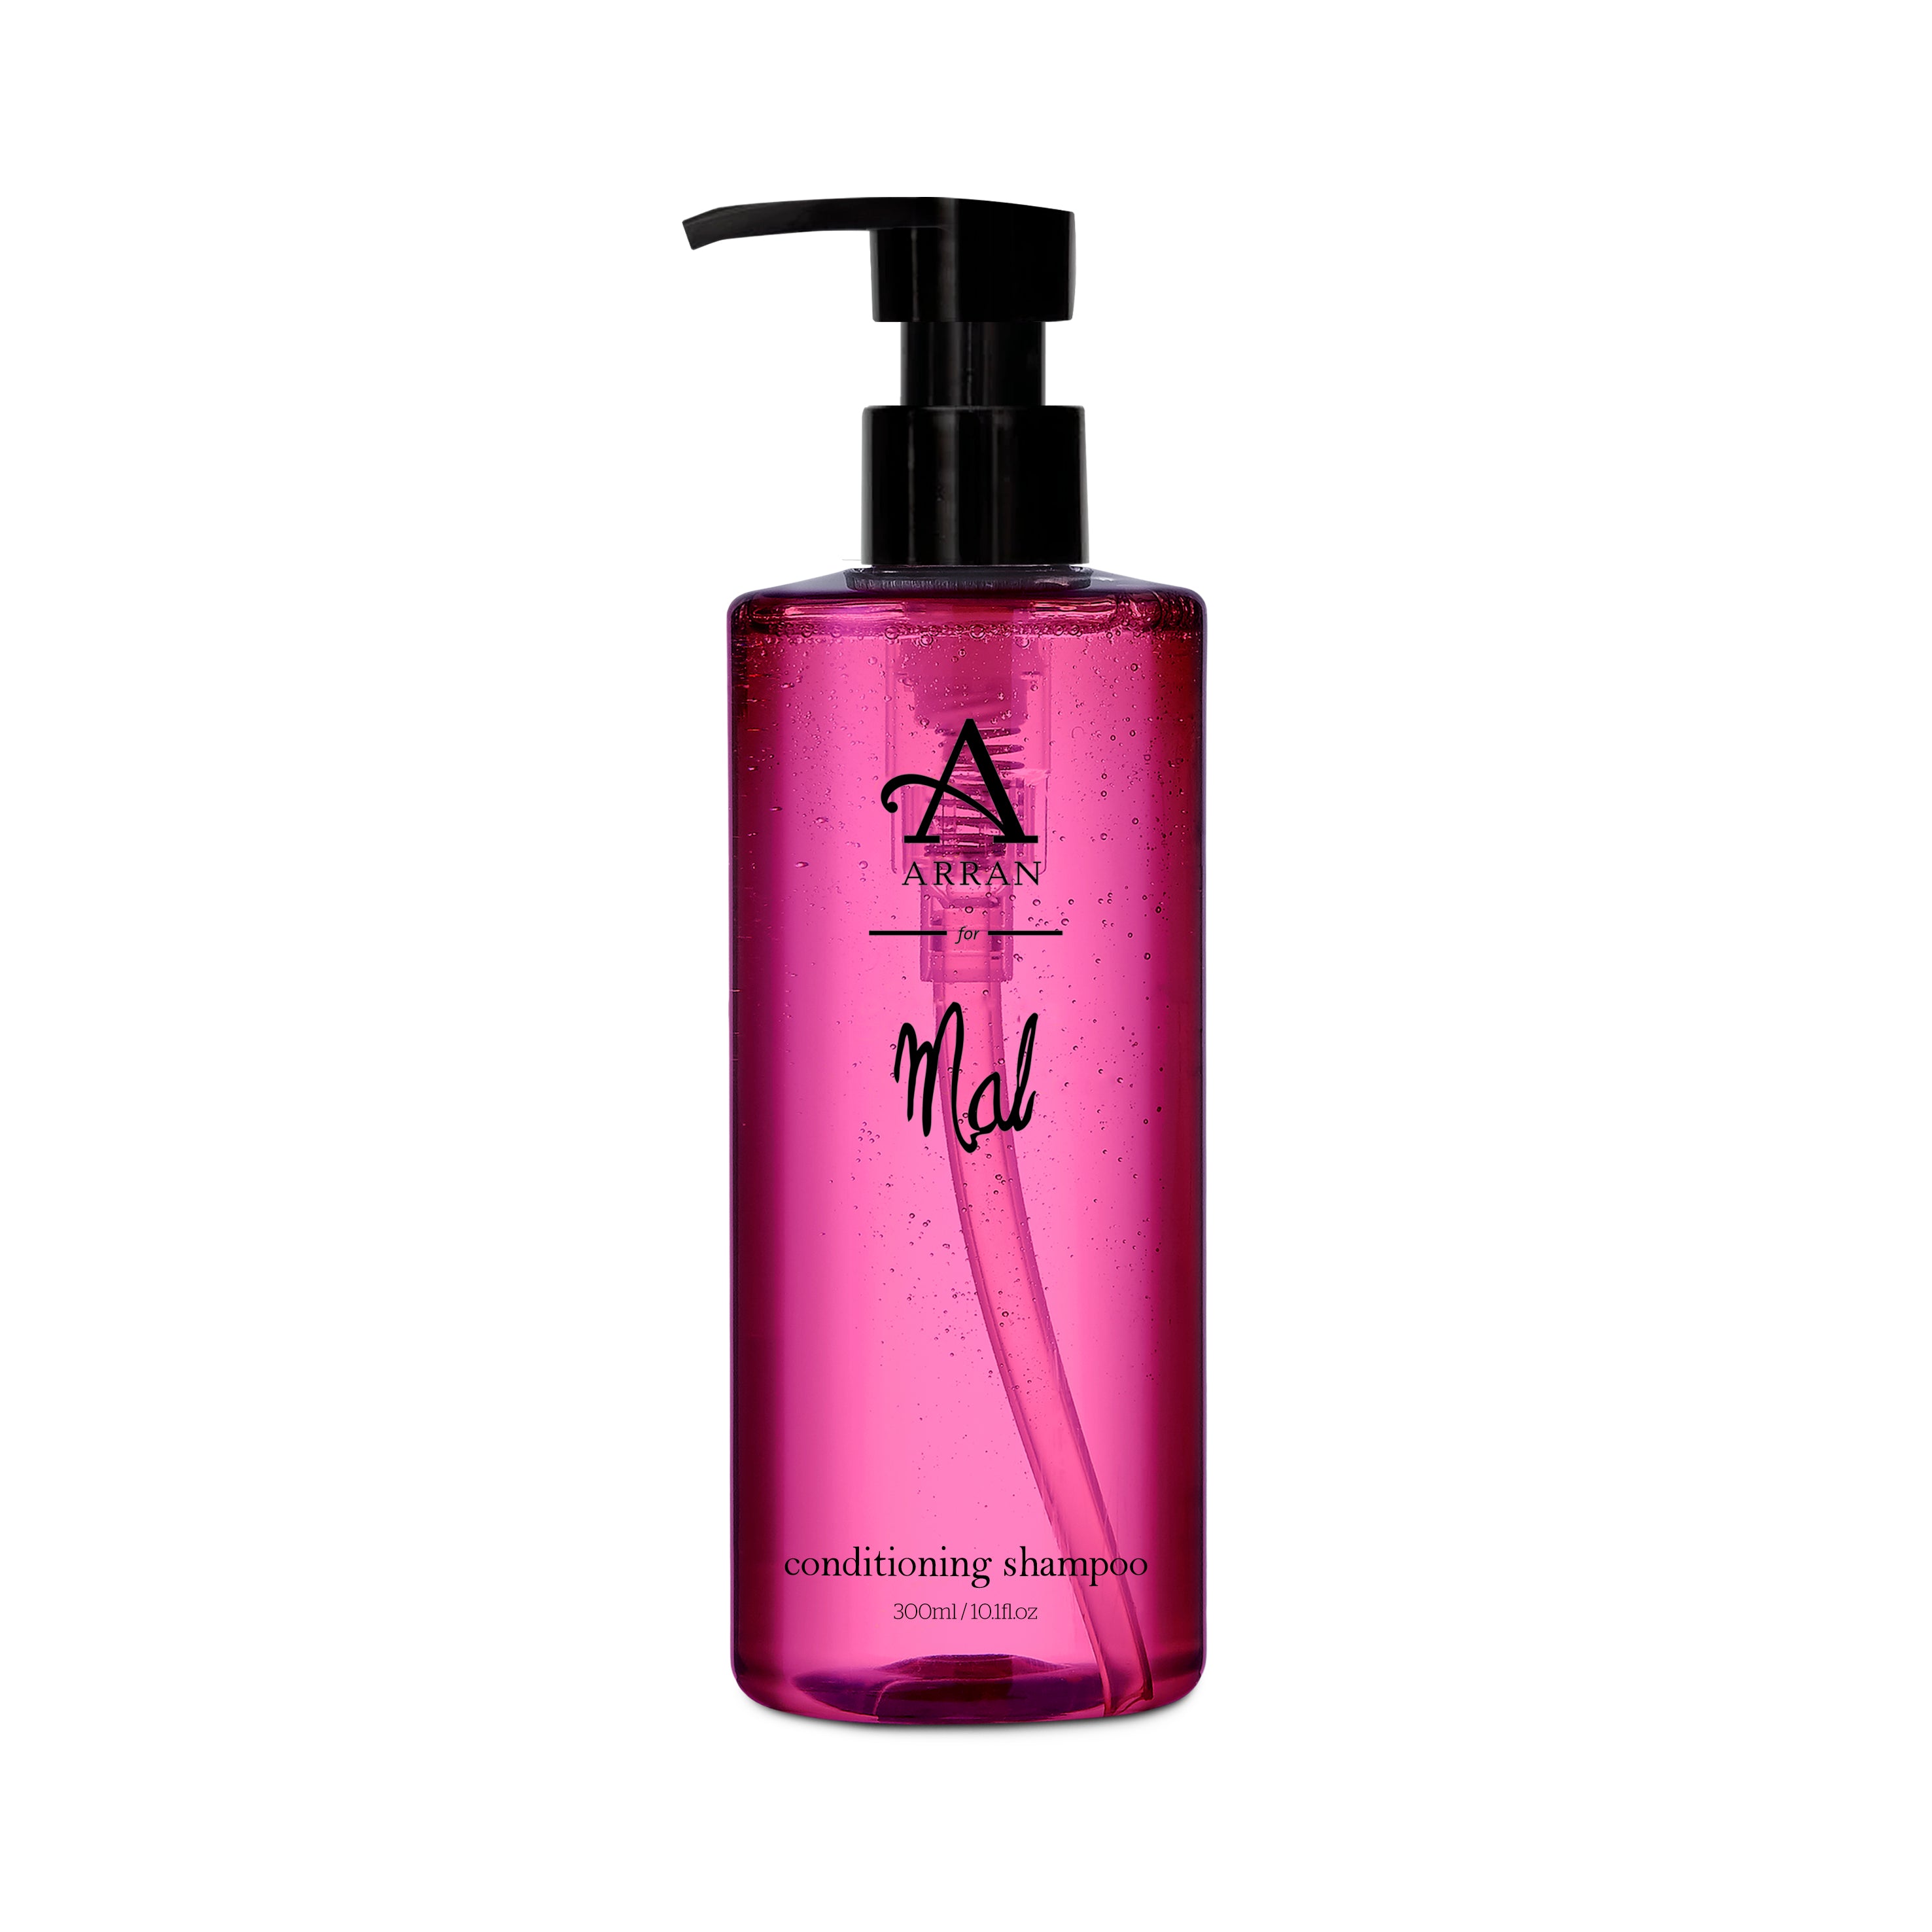 An image of ARRAN Malmaison Figleaf Conditioning Shampoo | Made in Scotland | Figleaf, Black...